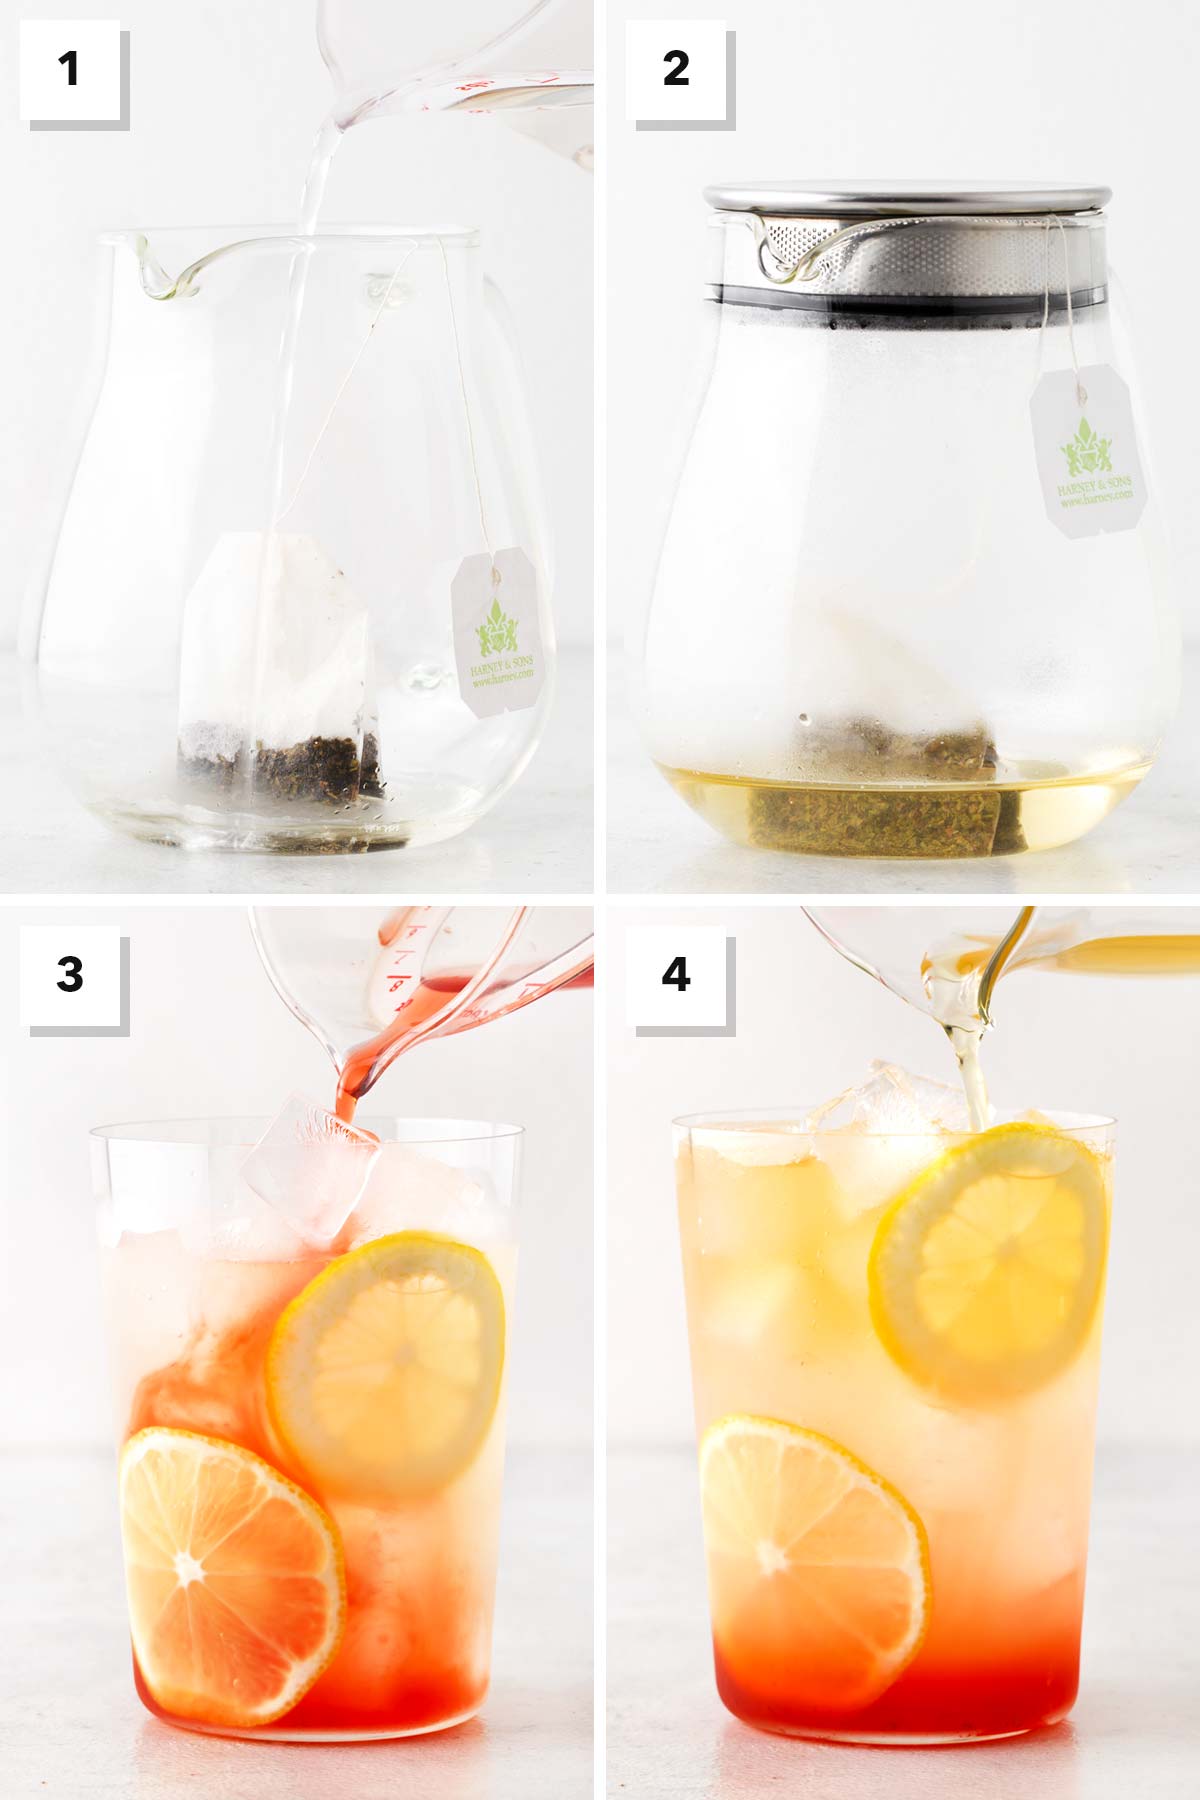 Steps to make Strawberry Green Tea Lemonade.